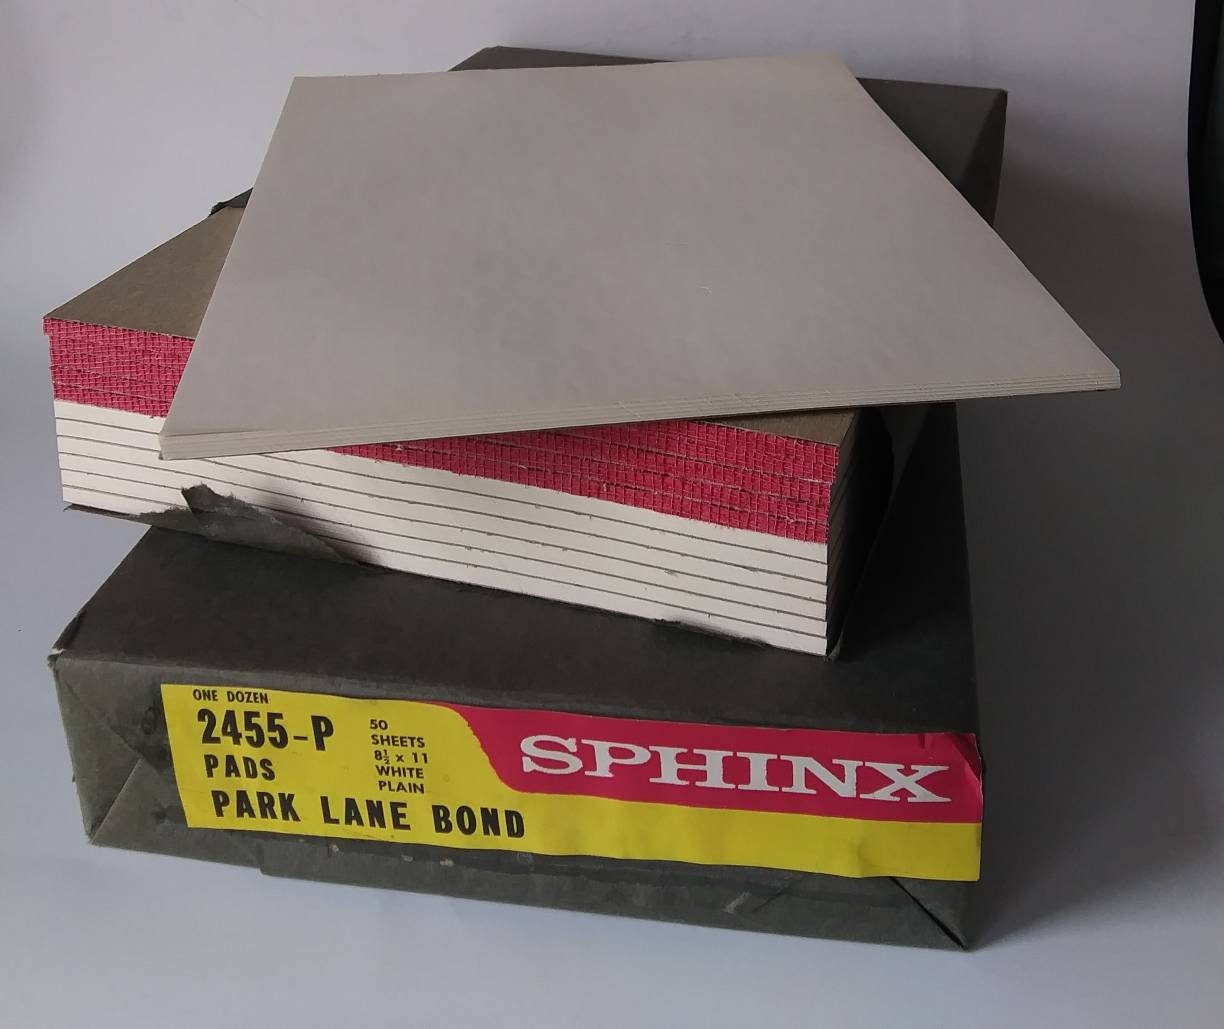 50 Sheet 8.5 x 11 Light Brown Cardstock Paper Pack by Park Lane